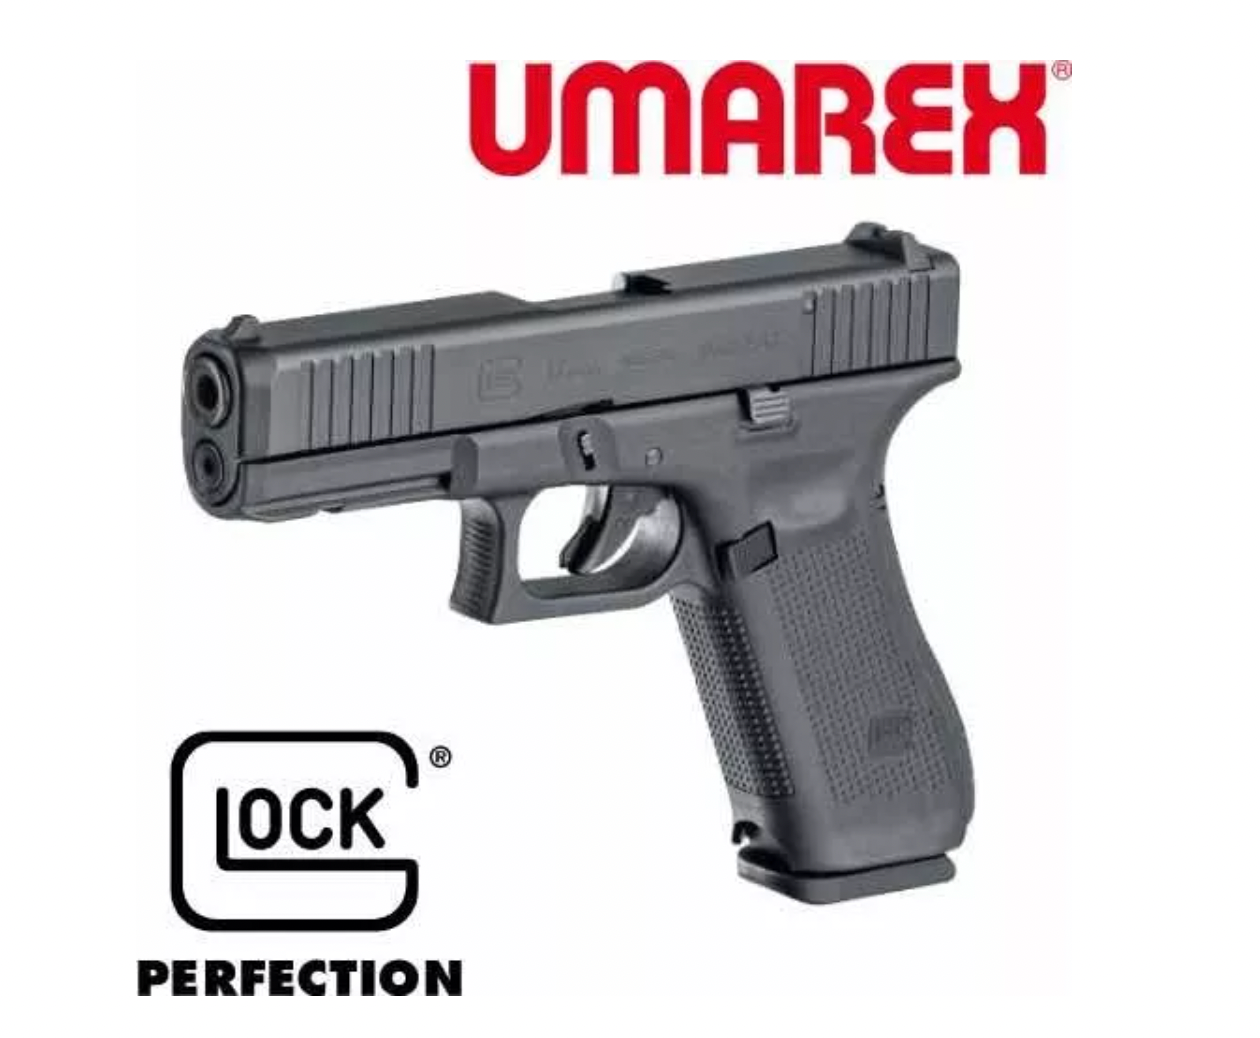 Pistola Fogueo Glock 17 Gen 5 / Umarex 9mm - hiking outdoor Chile